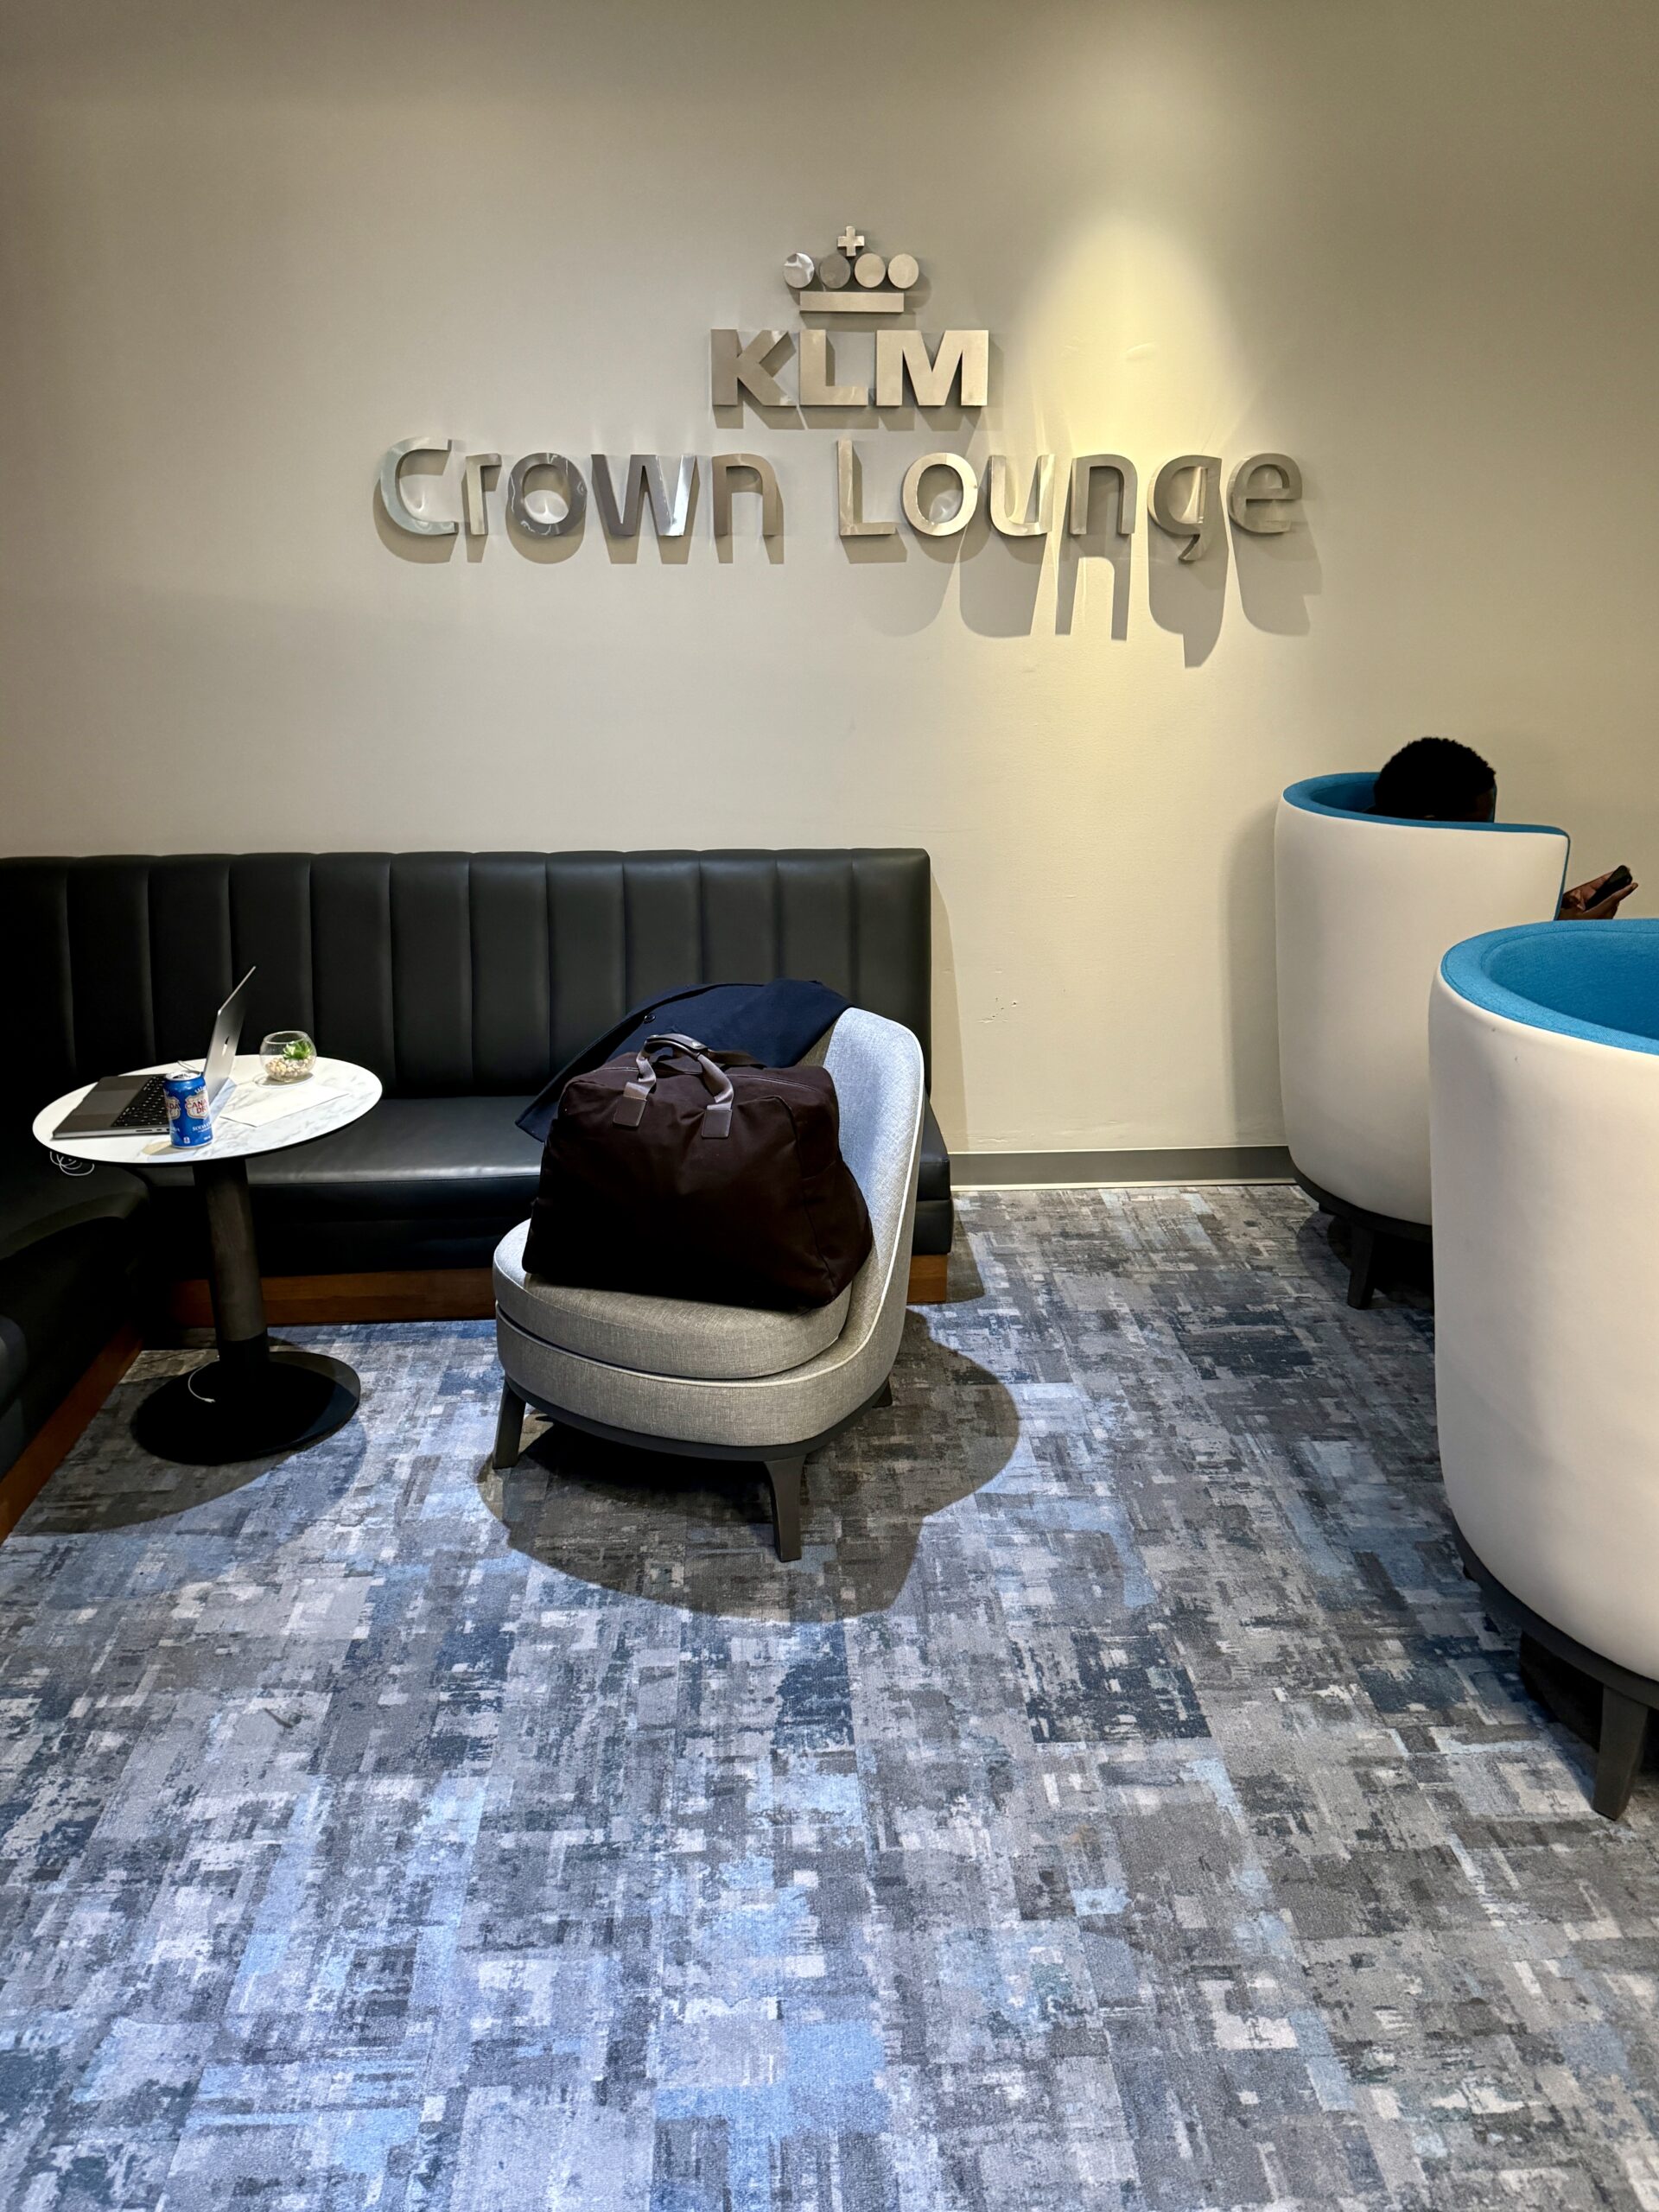 KLM Crown Lounge YYZ 28